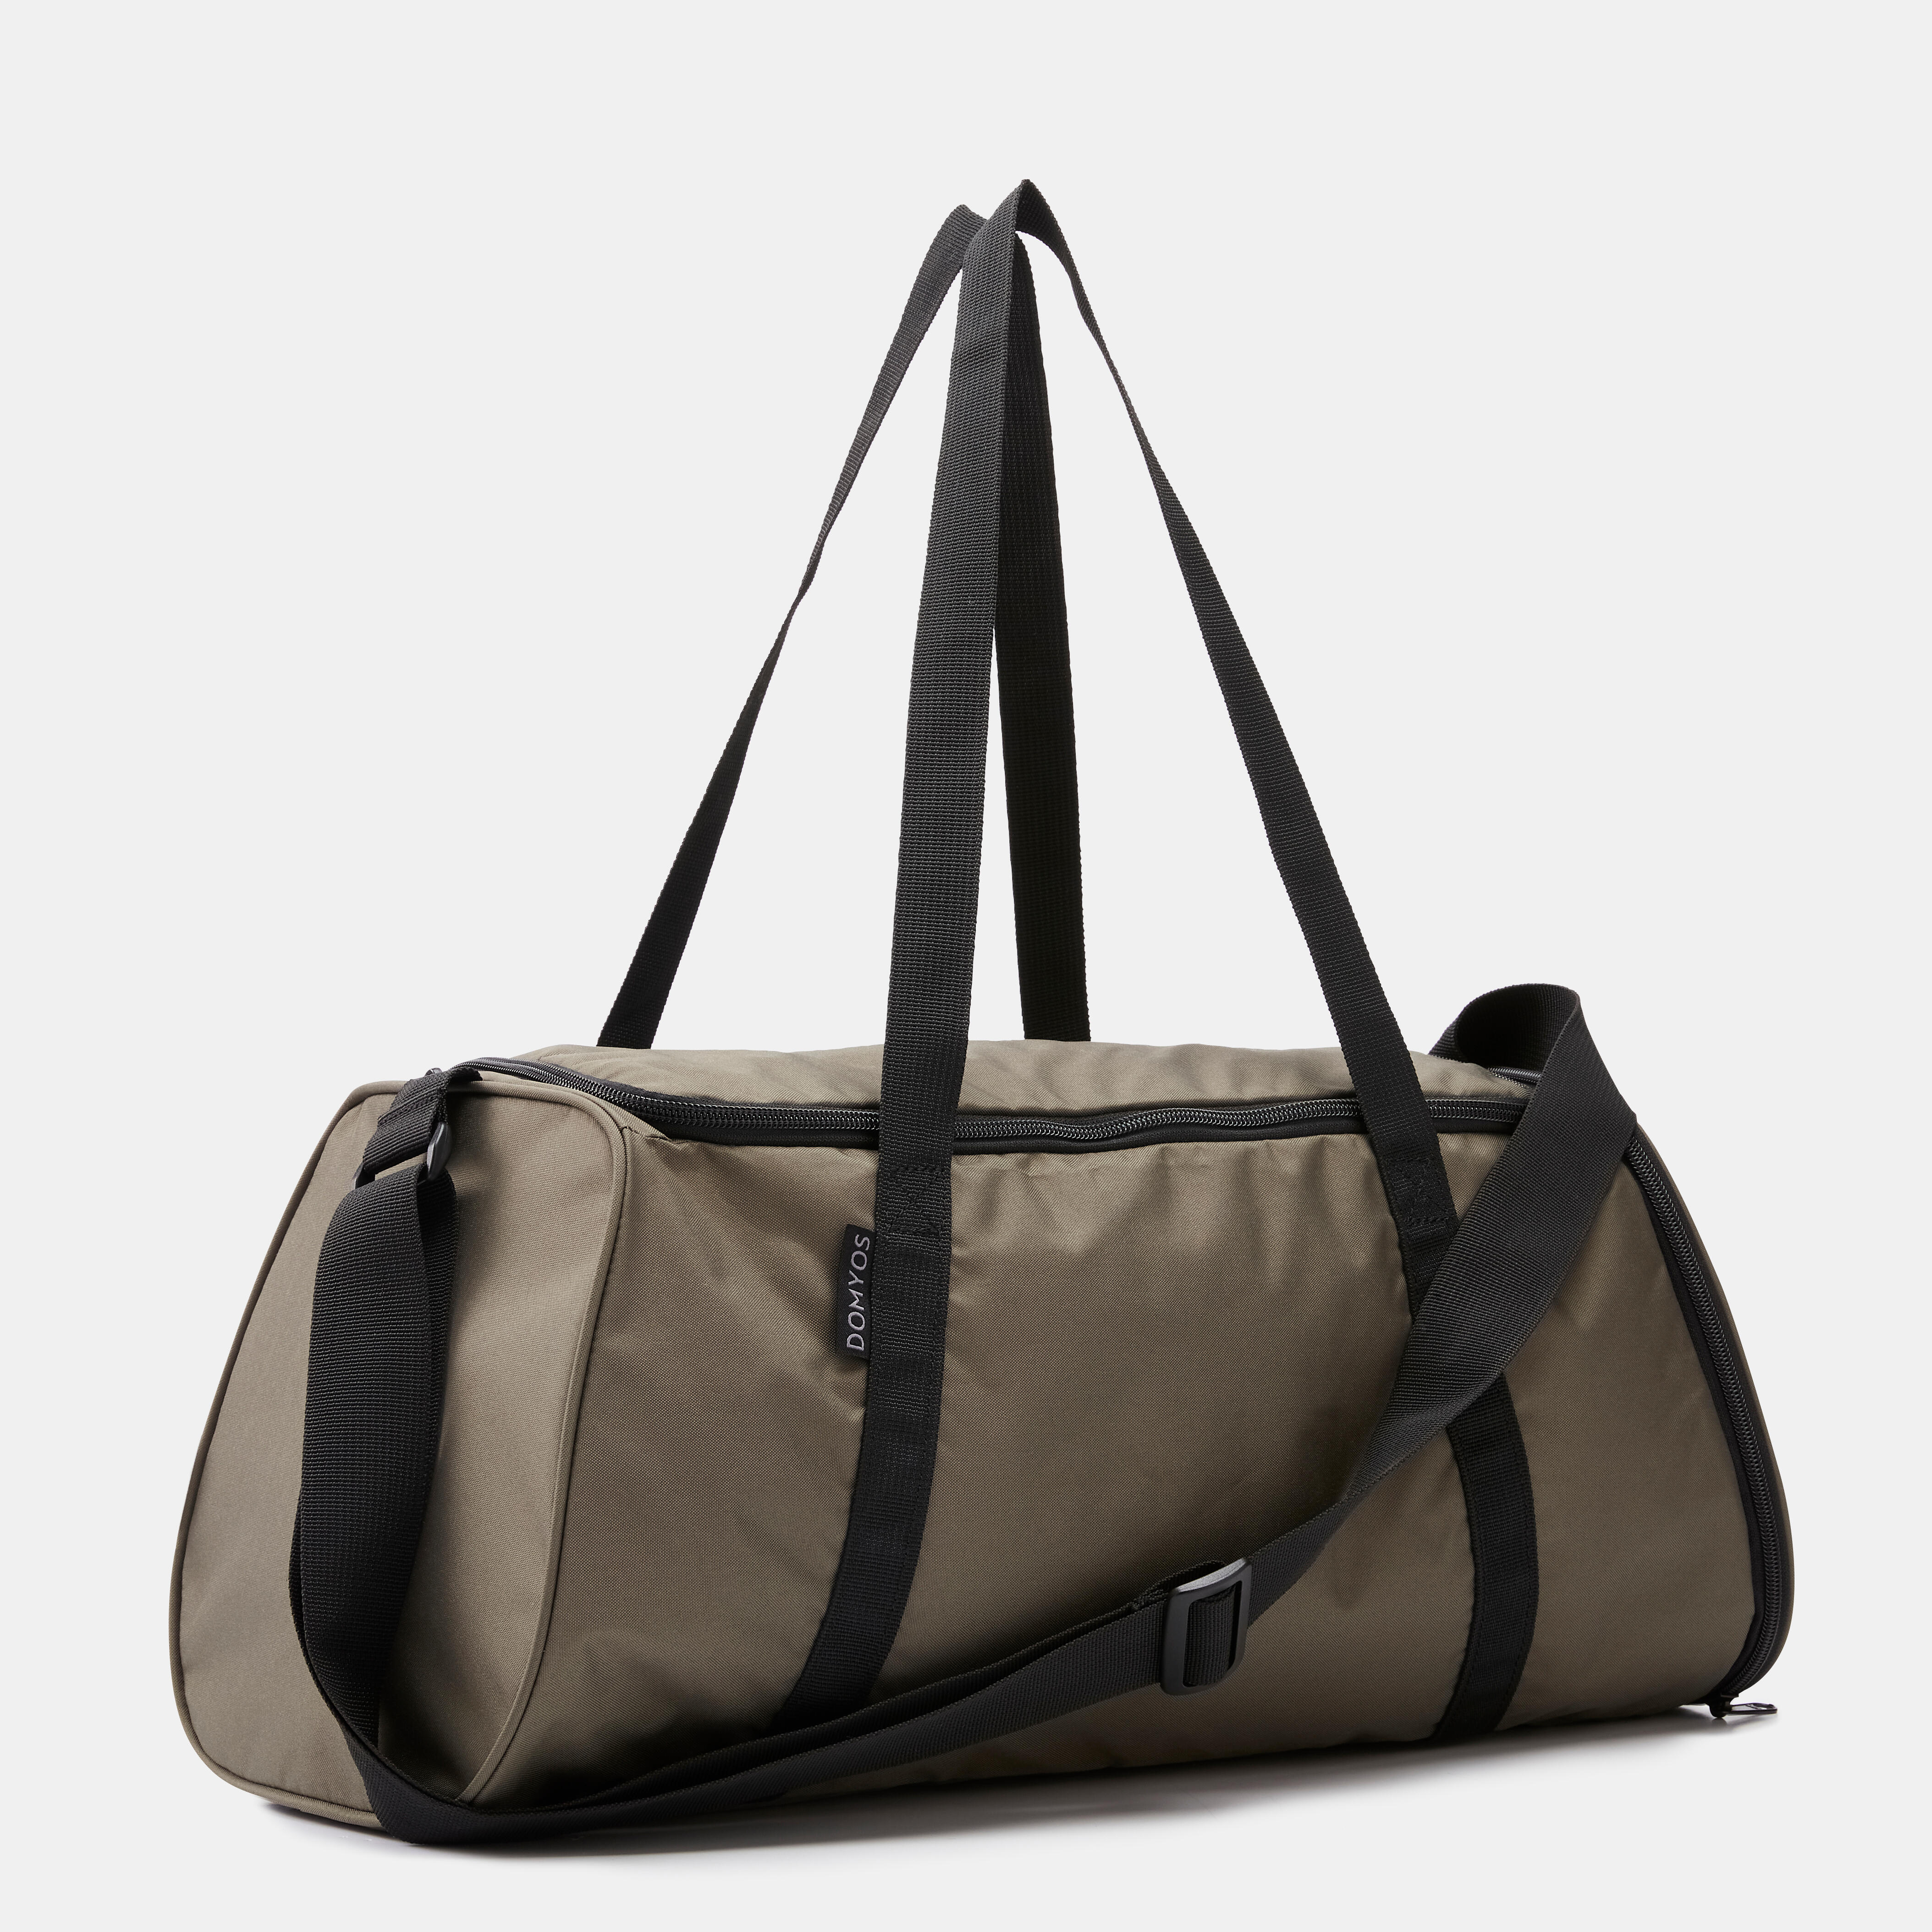 Custom Duffle Bags - Design Your Own | Printful